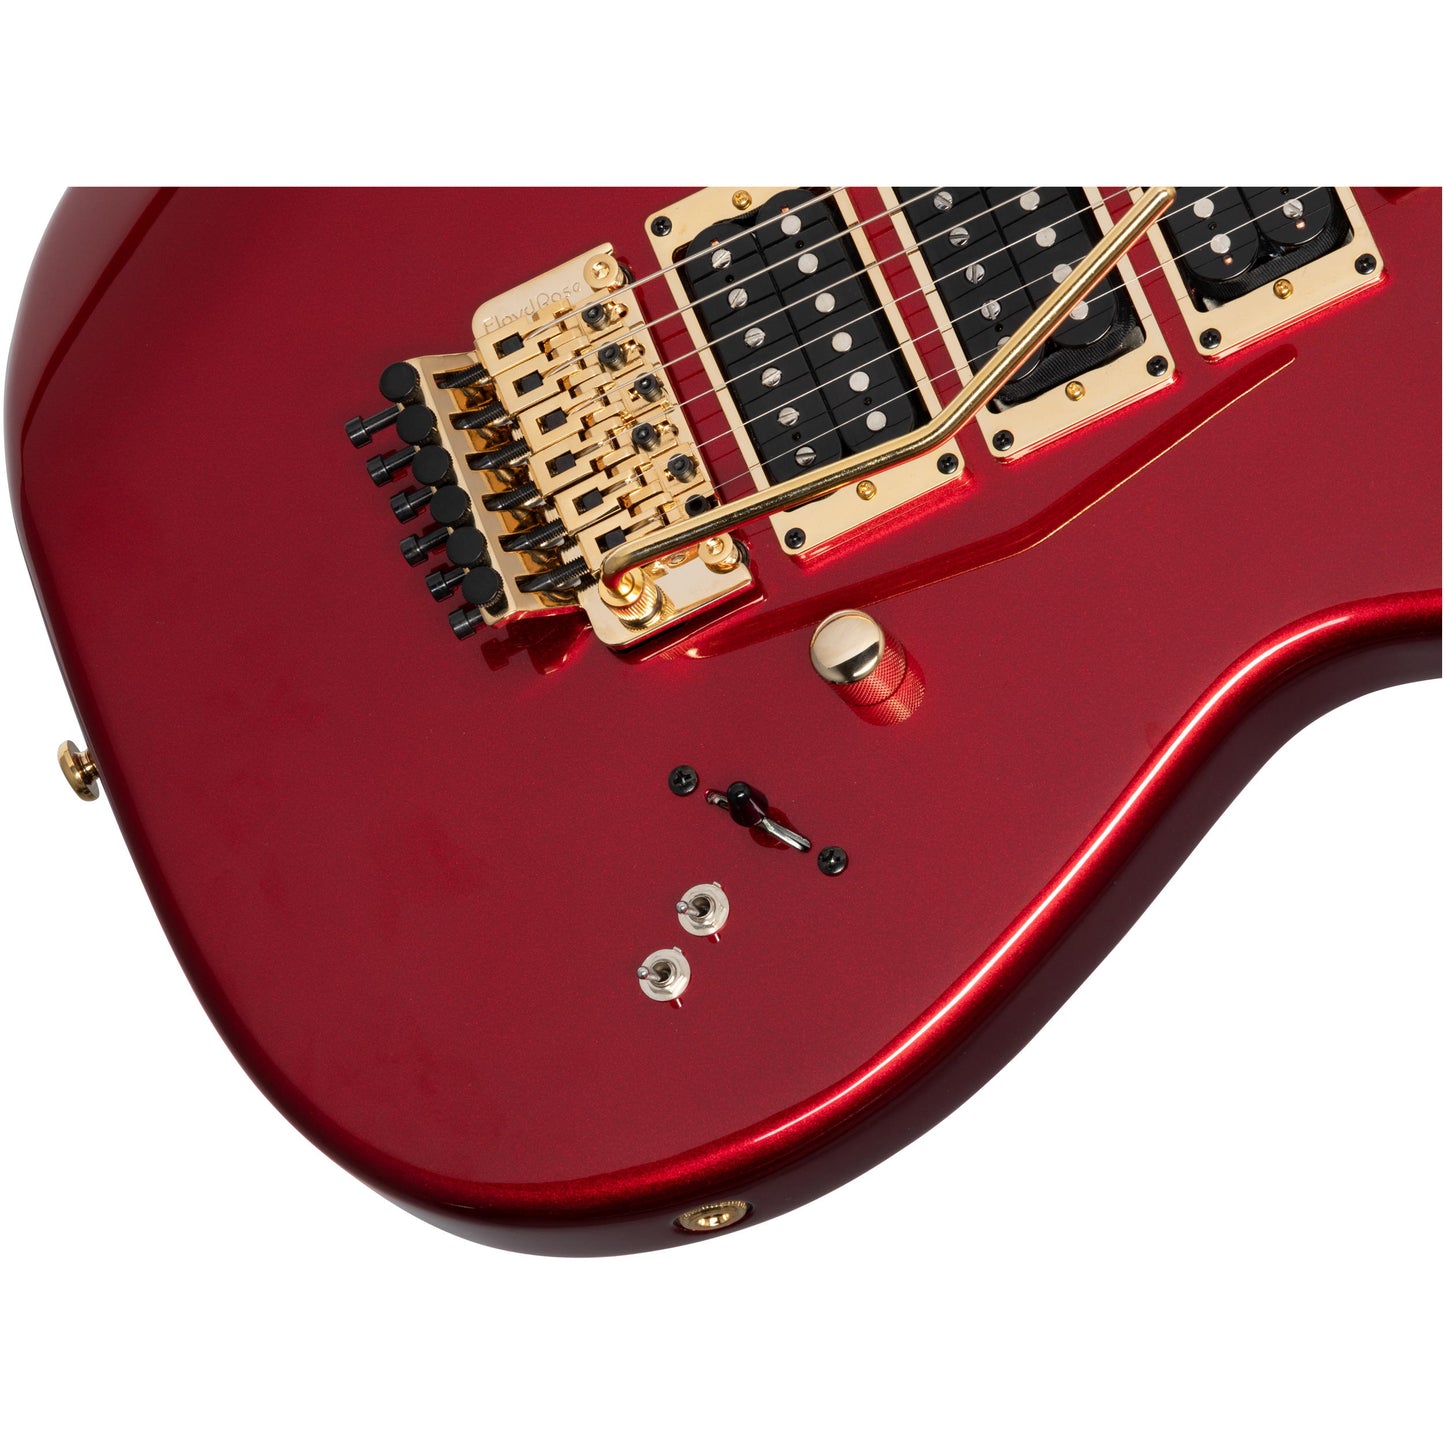 Kramer Jersey Star Electric Guitar, Candy Apple Red